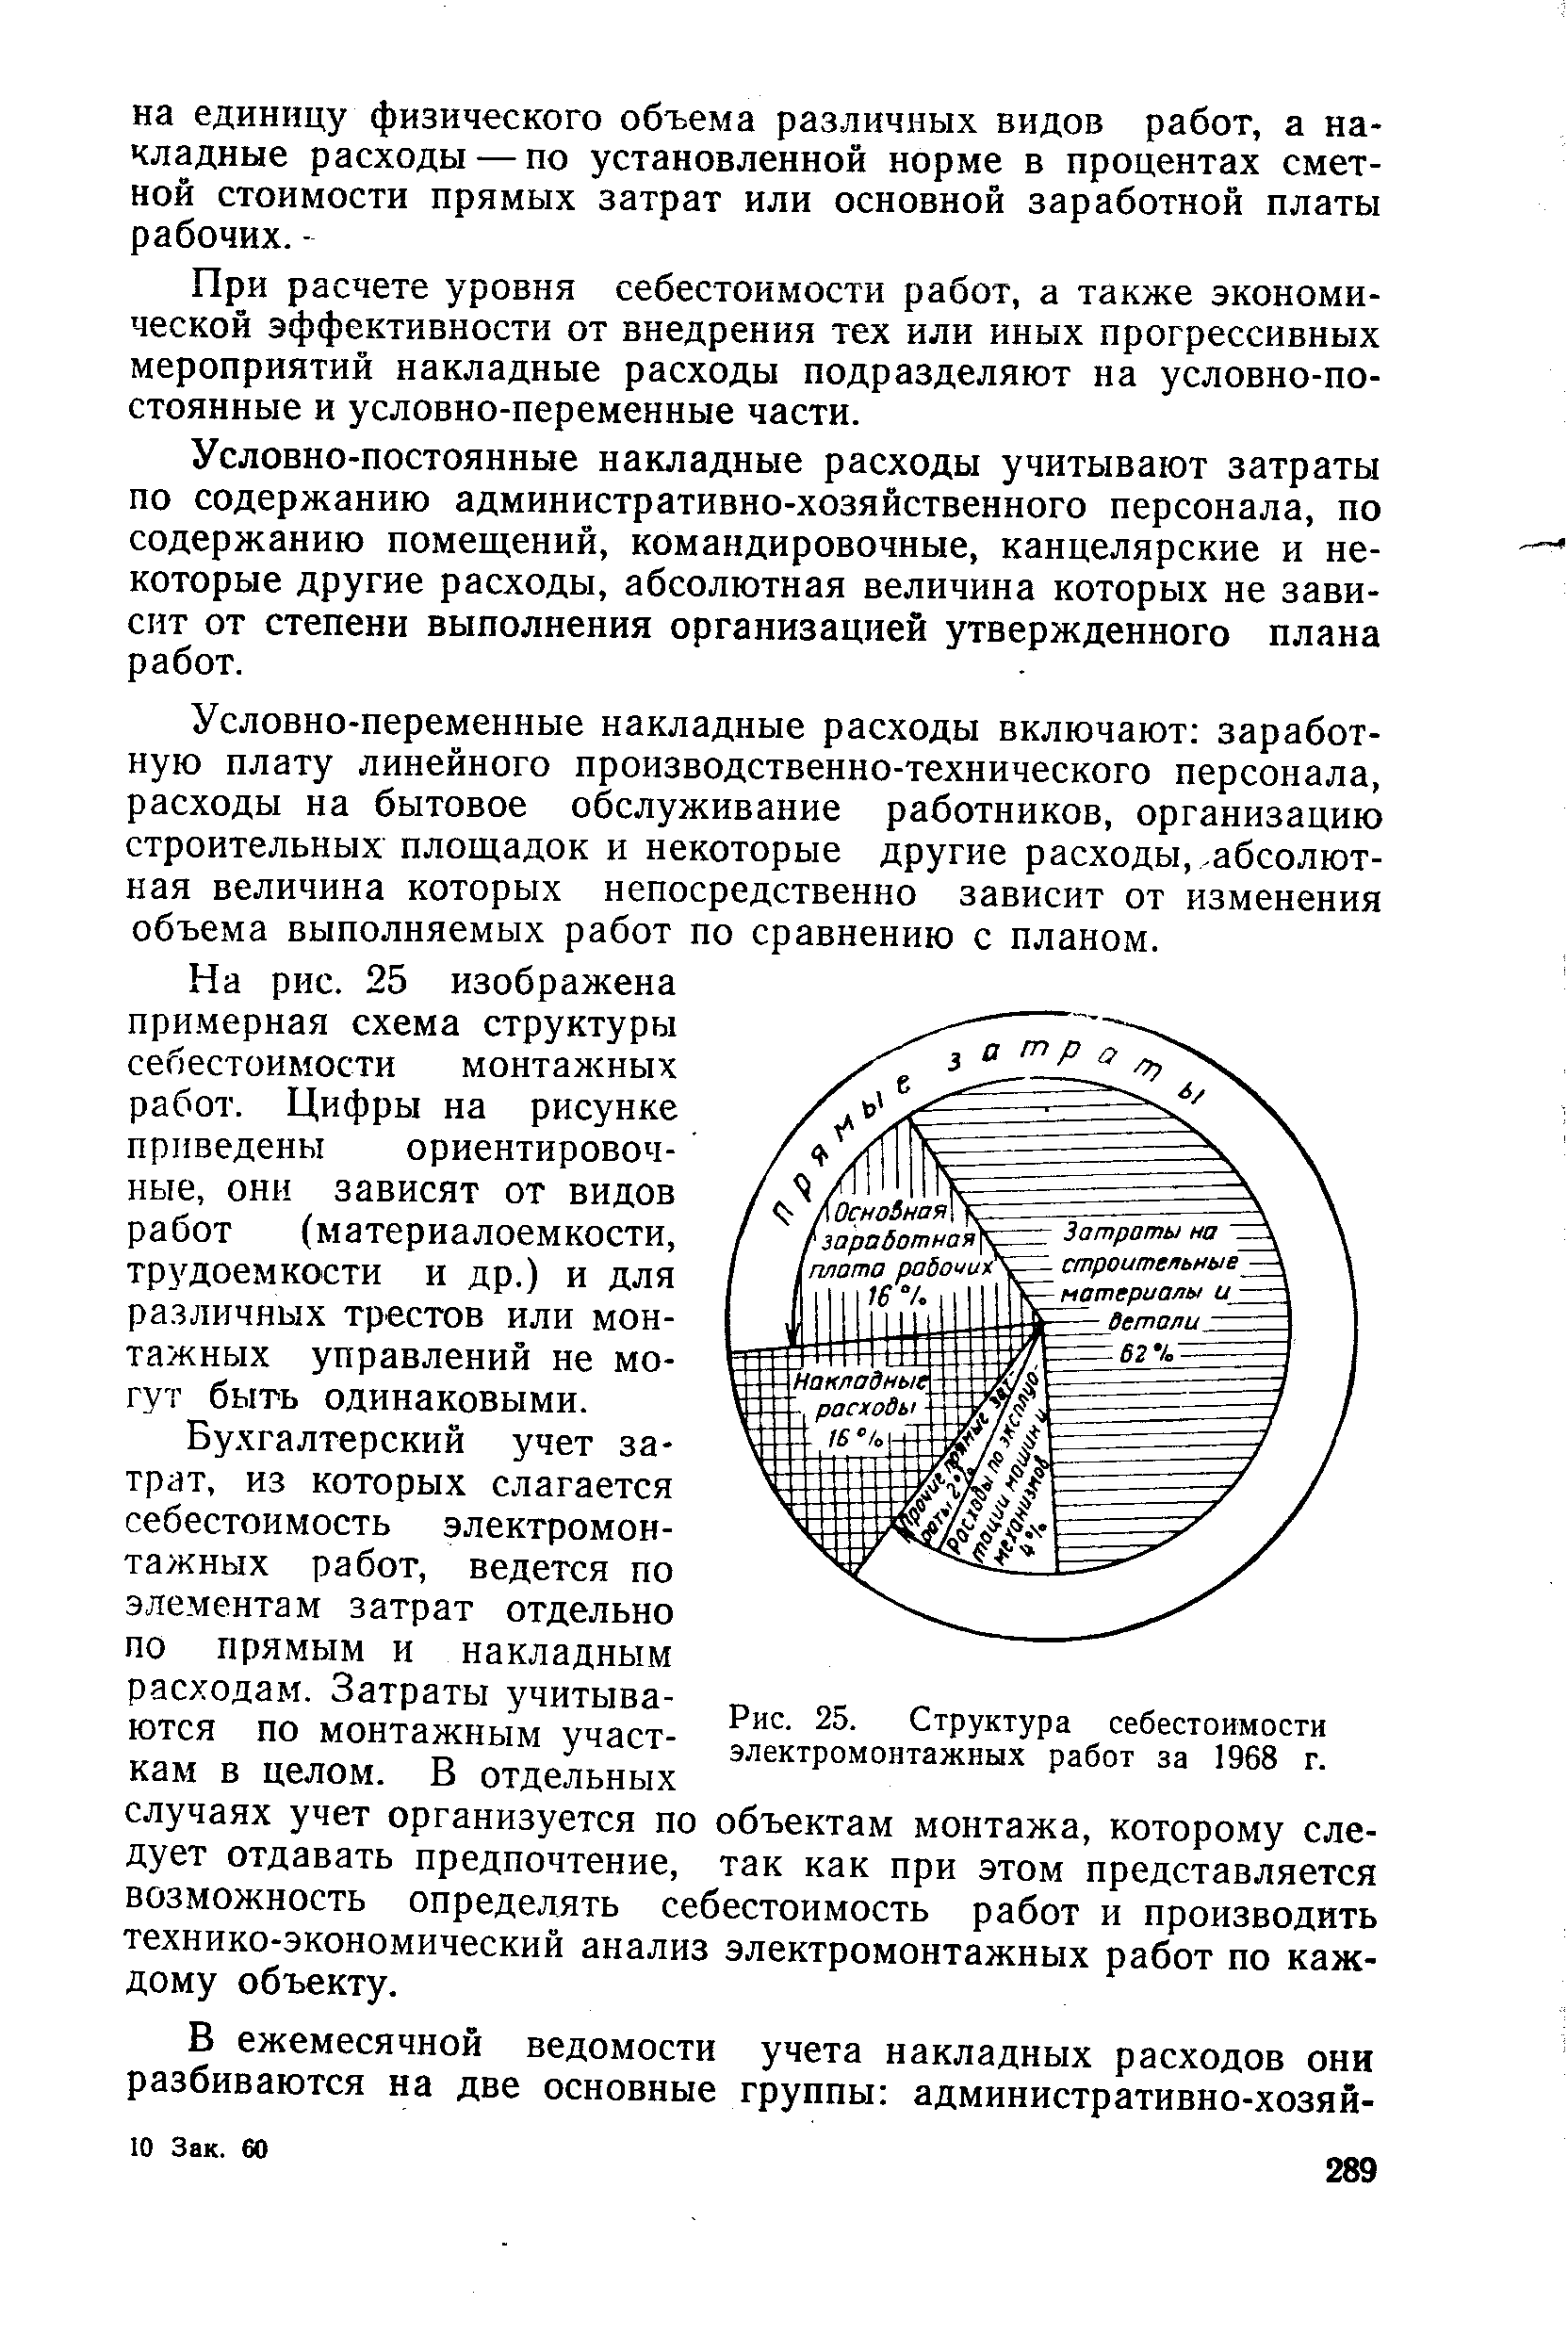 Рис. 25. <a href="/info/1288">Структура себестоимости</a> электромонтажных работ за 1968 г.
